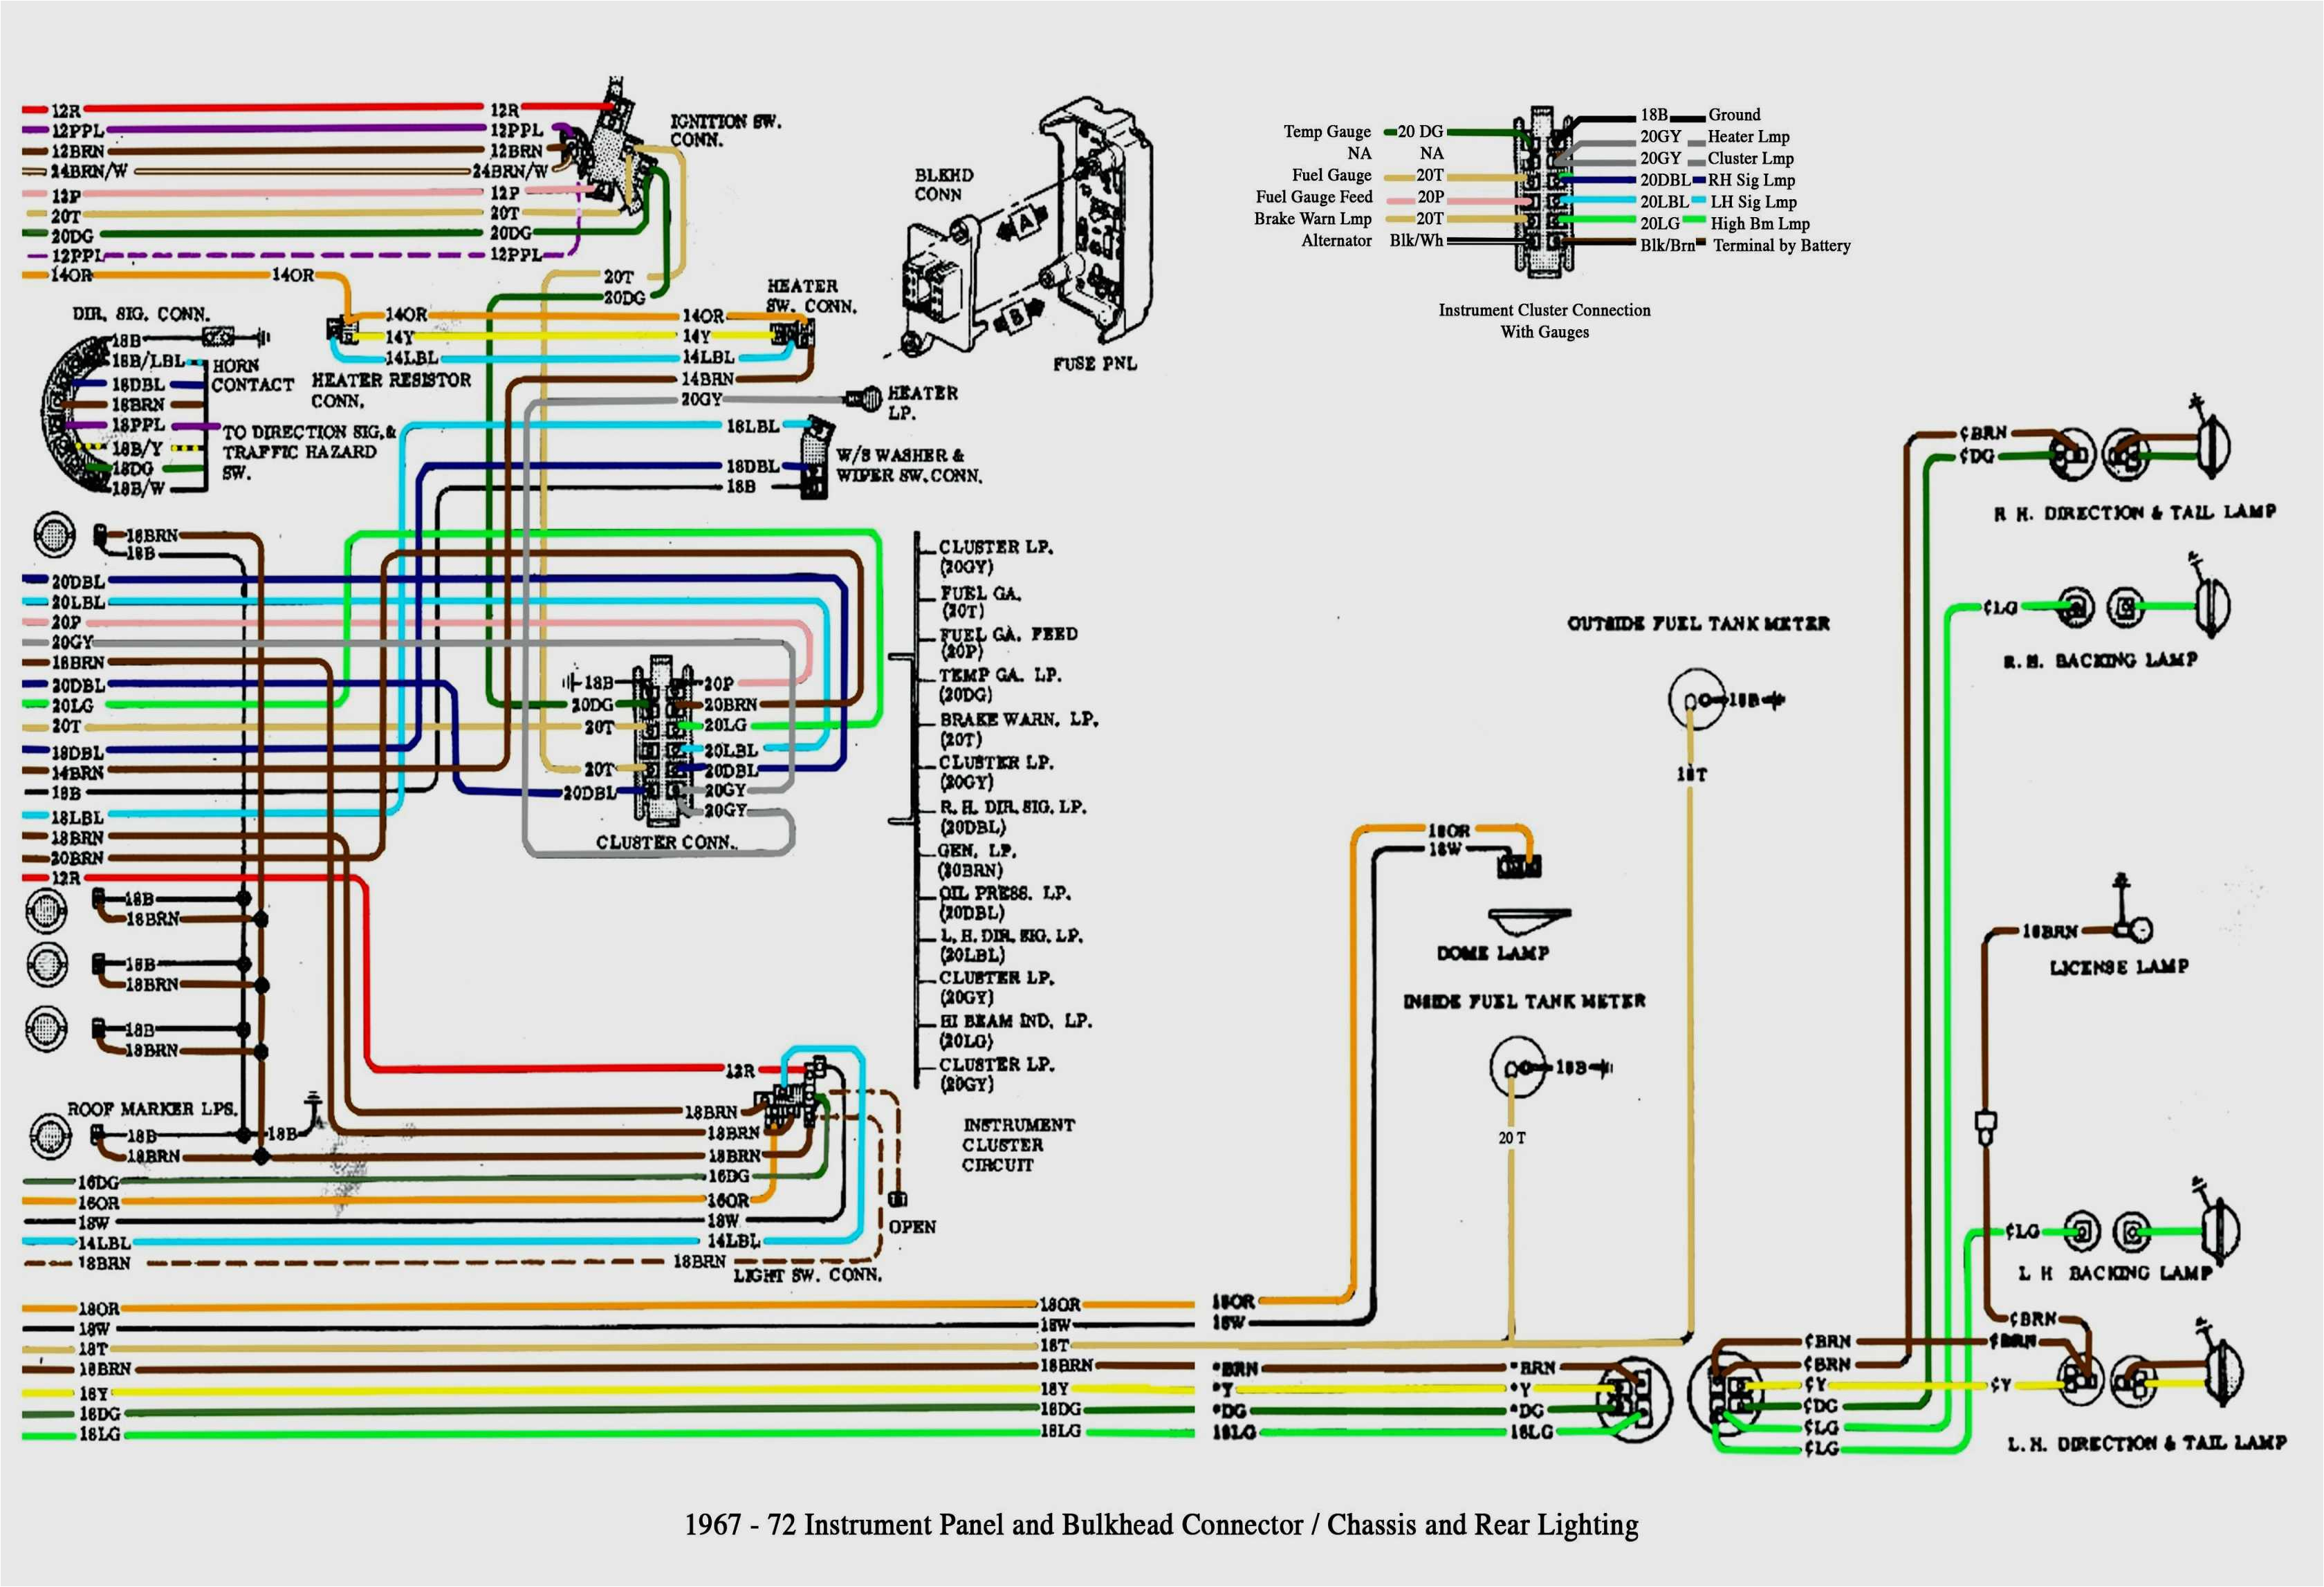 2013 gmc trailer wiring harness diagram wiring diagram blog 2013 gmc trailer wiring harness diagram